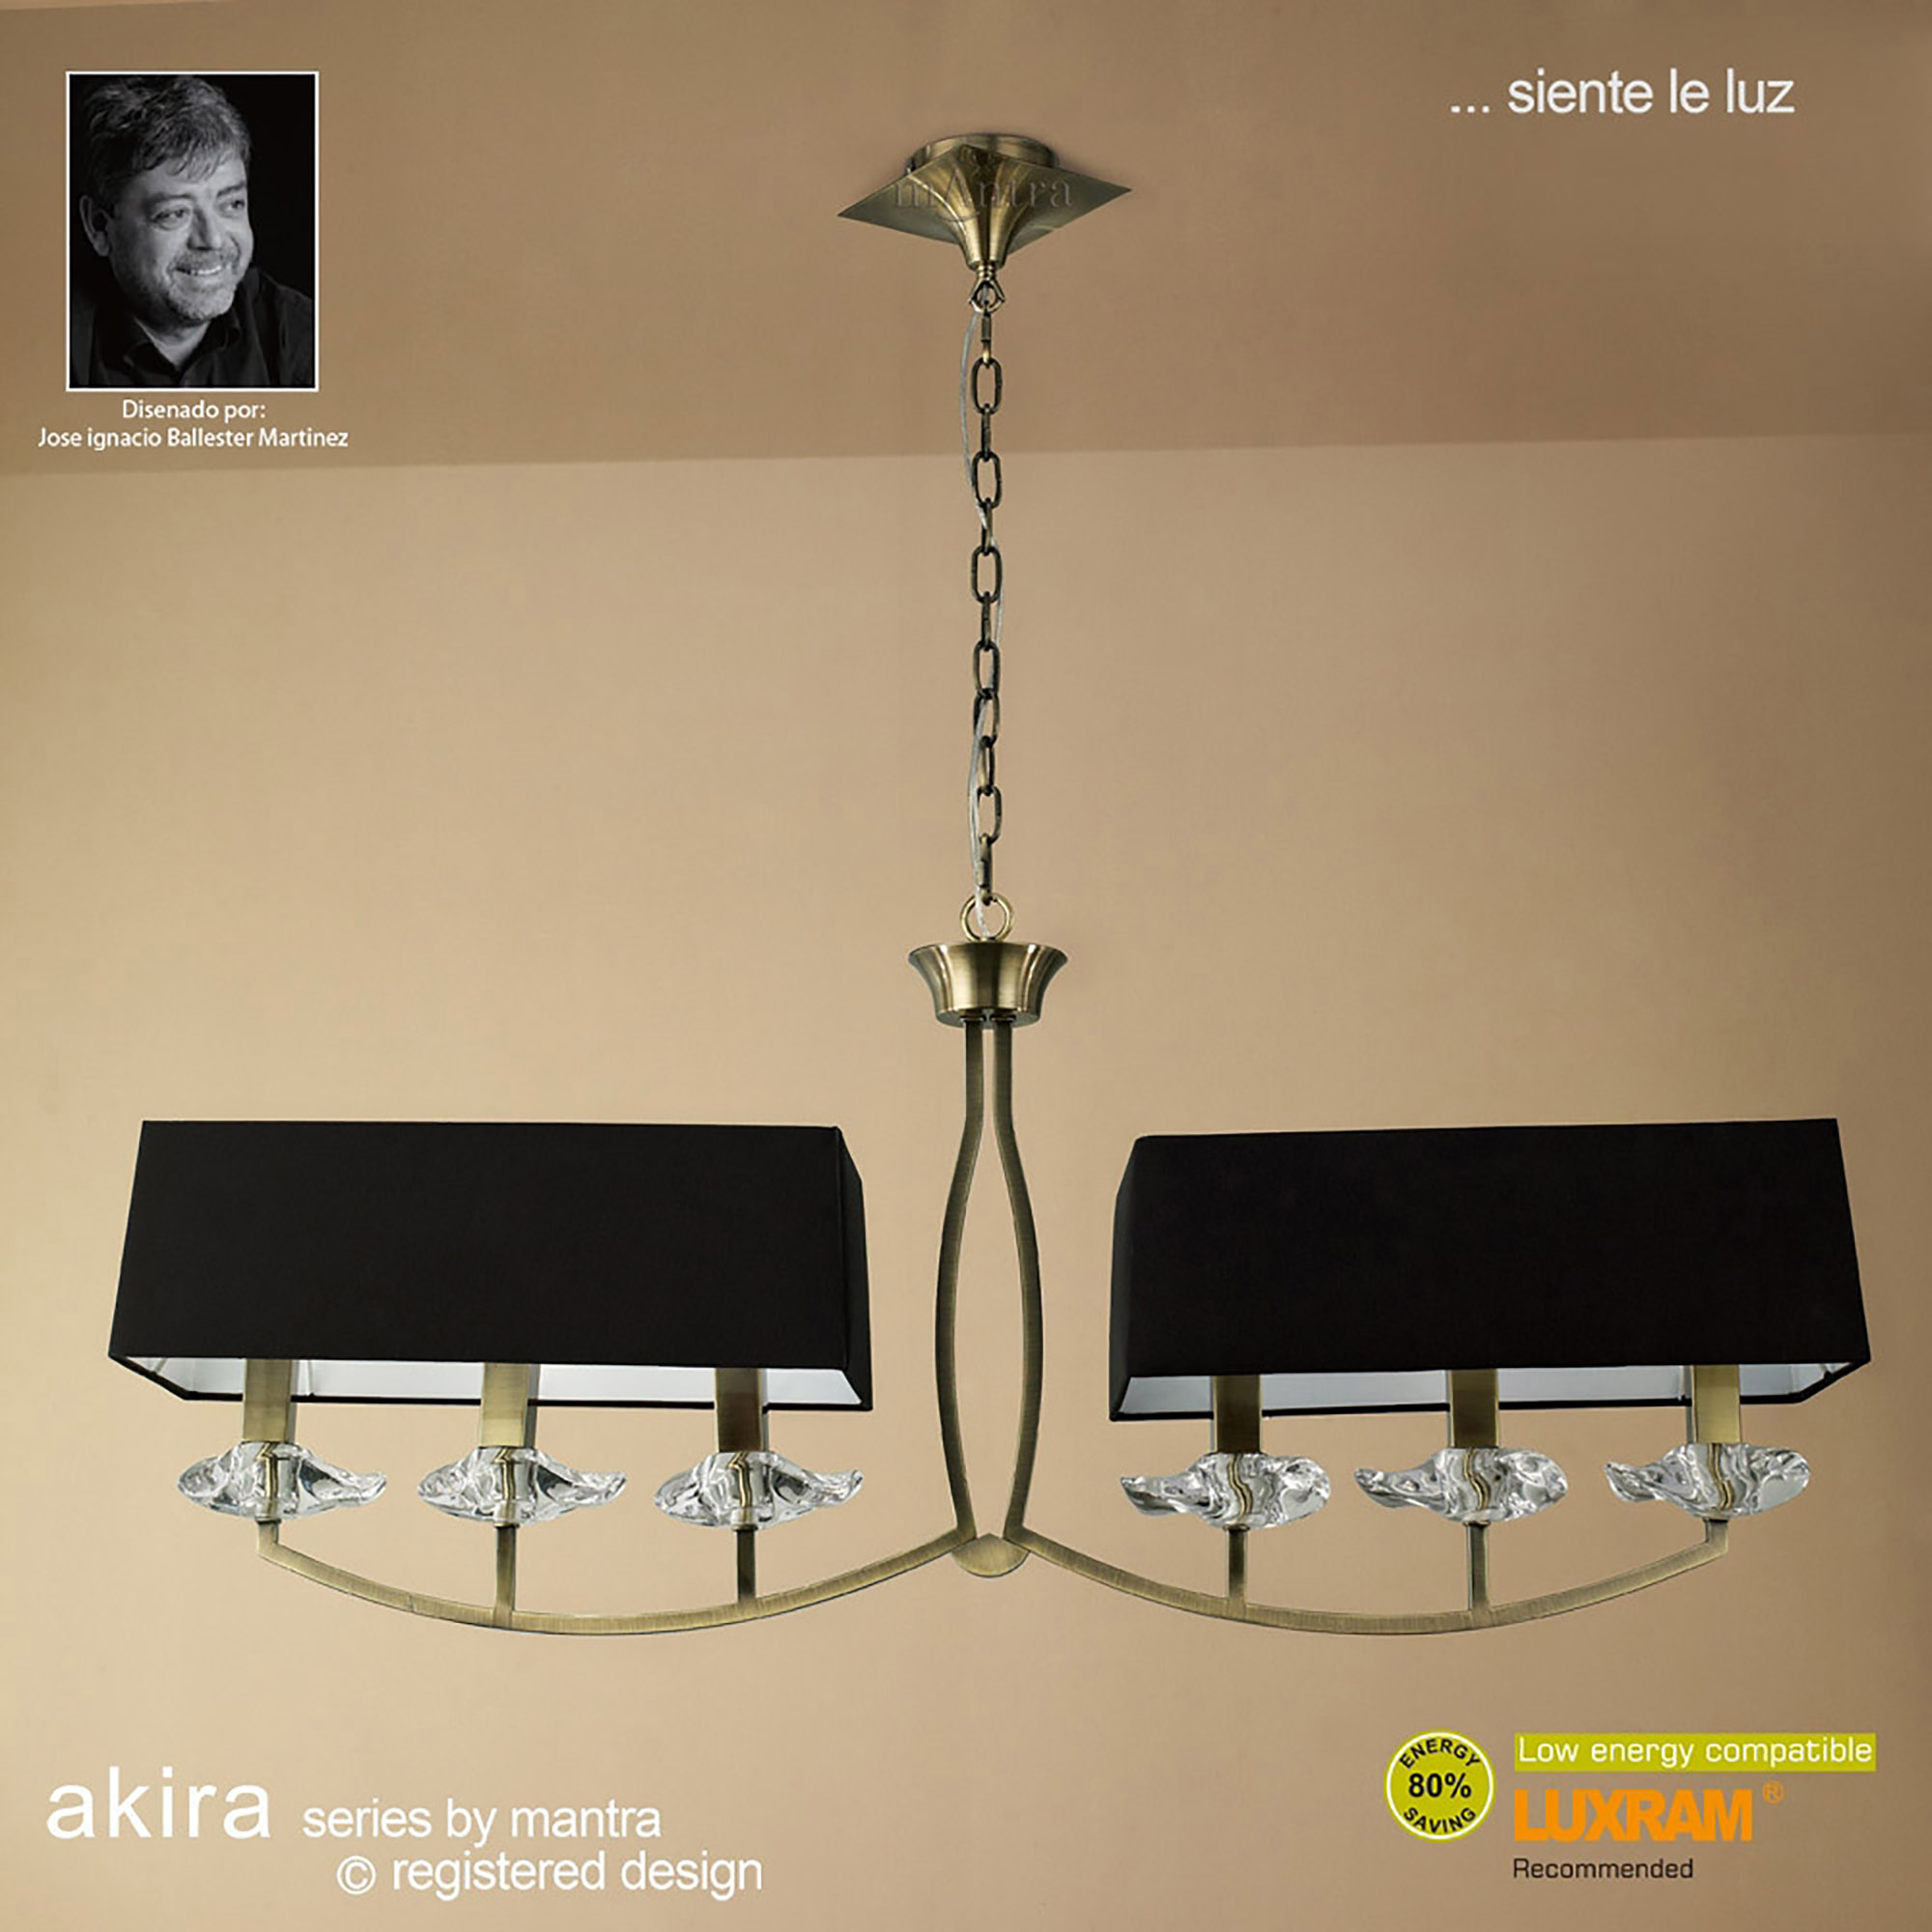 Akira AB Ceiling Lights Mantra Multi Arm Fittings